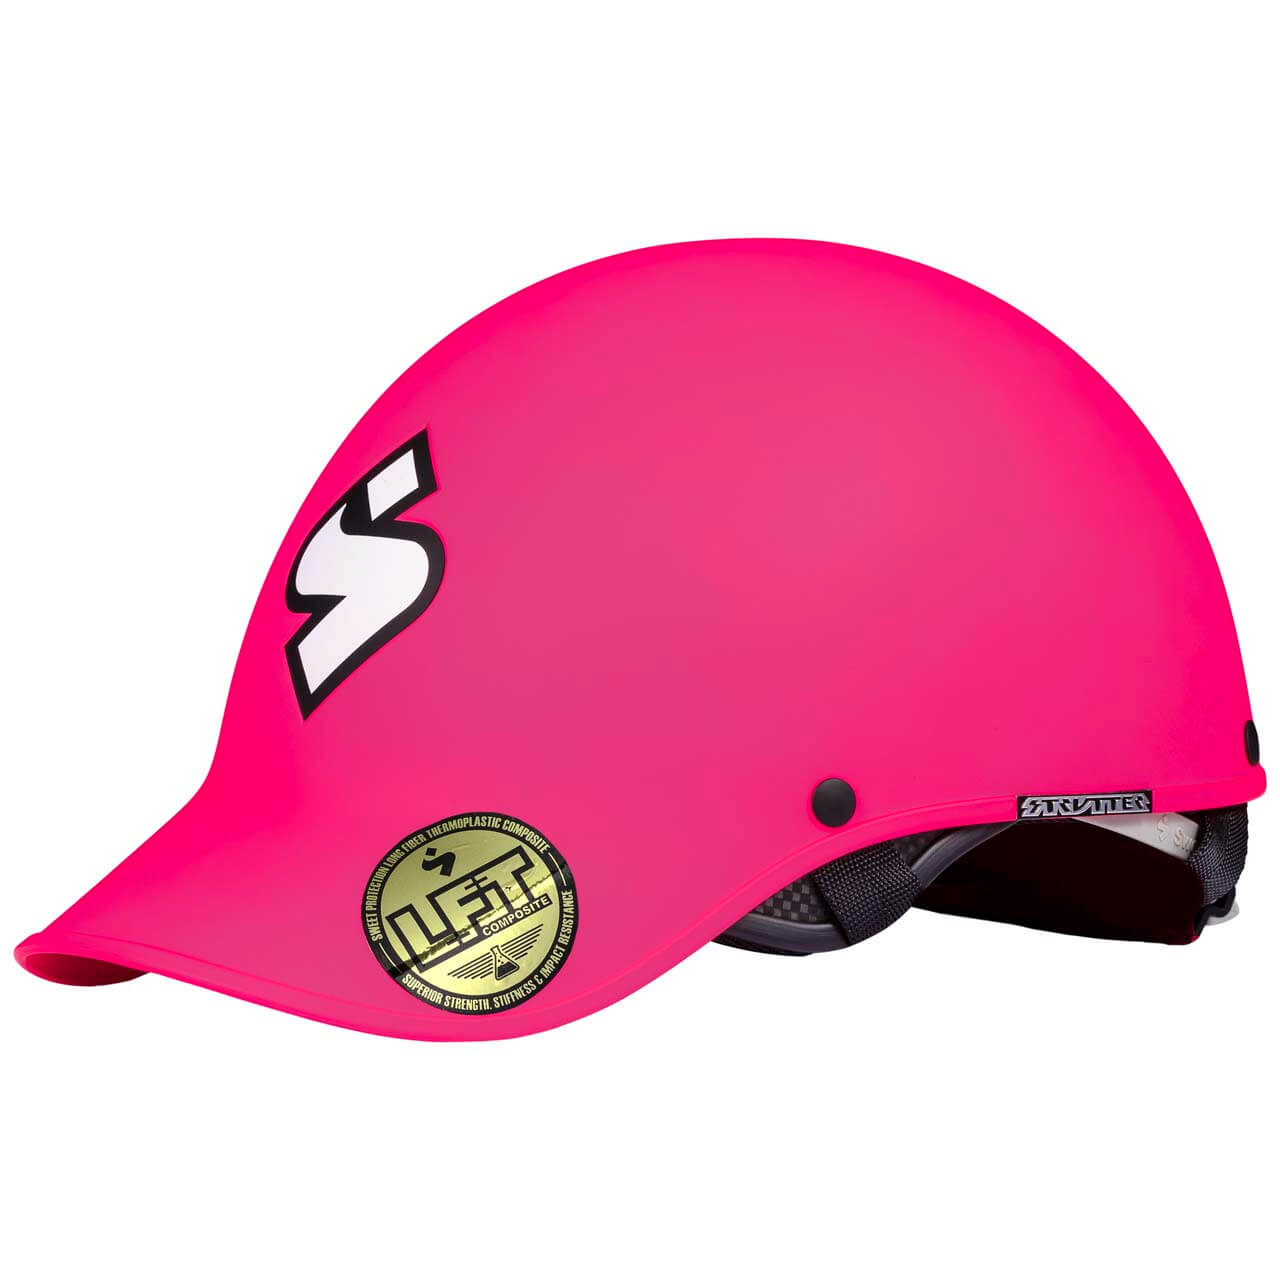 Sweet Strutter Freestyle Kajakhelm - Neon Pink, S/M von Sweet Protection